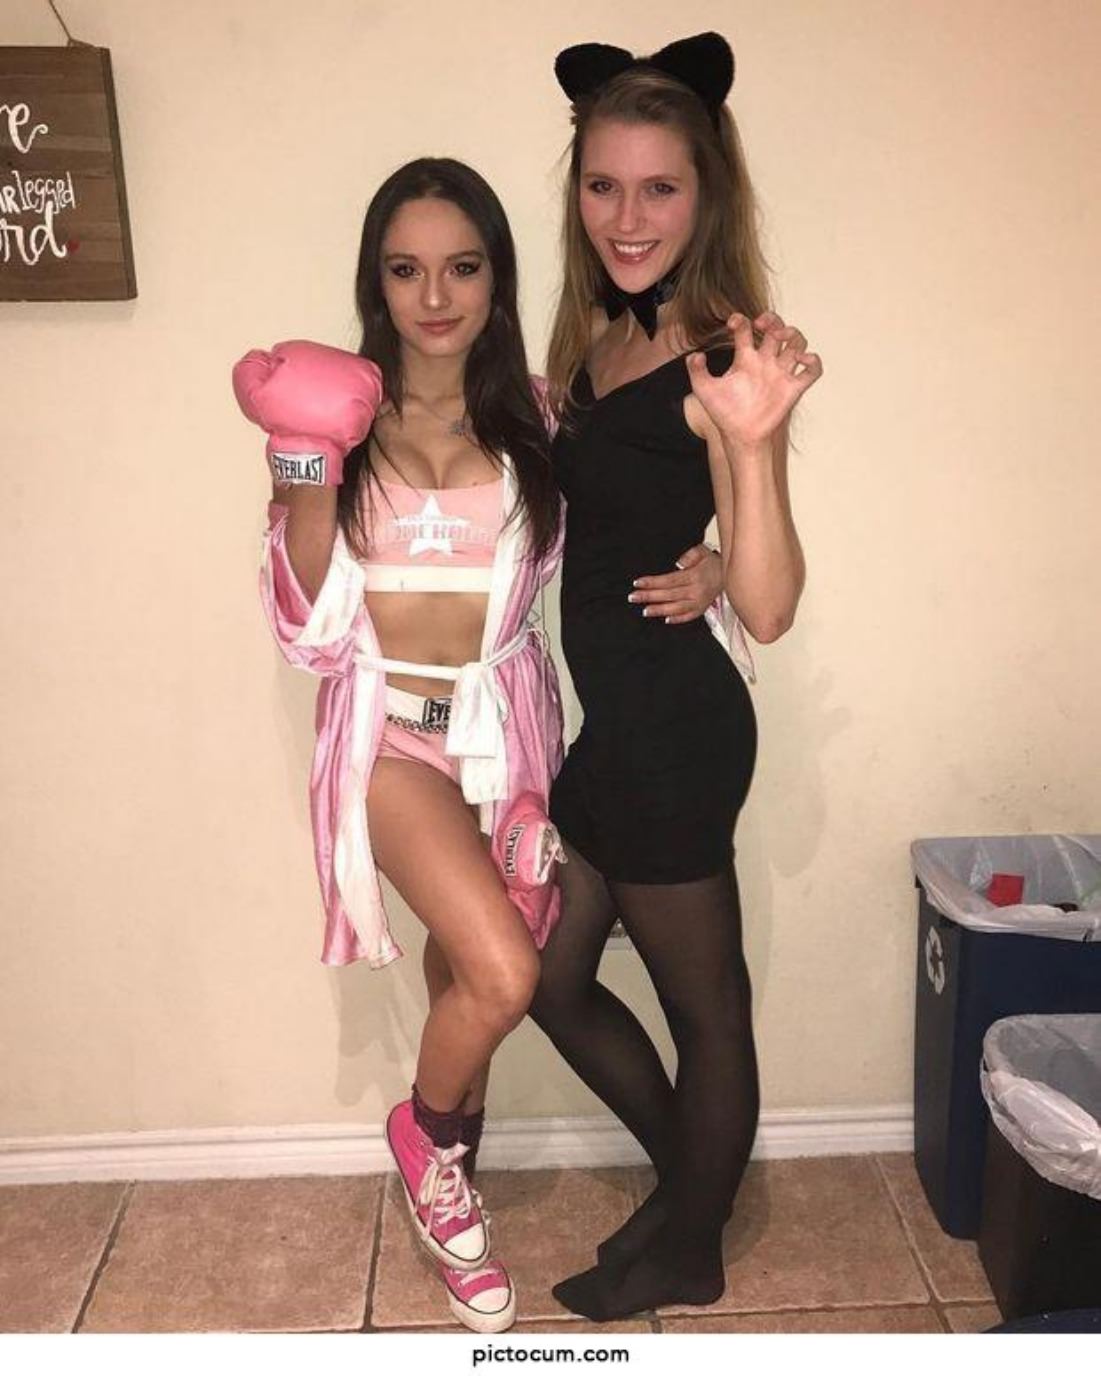 The girls of Halloween